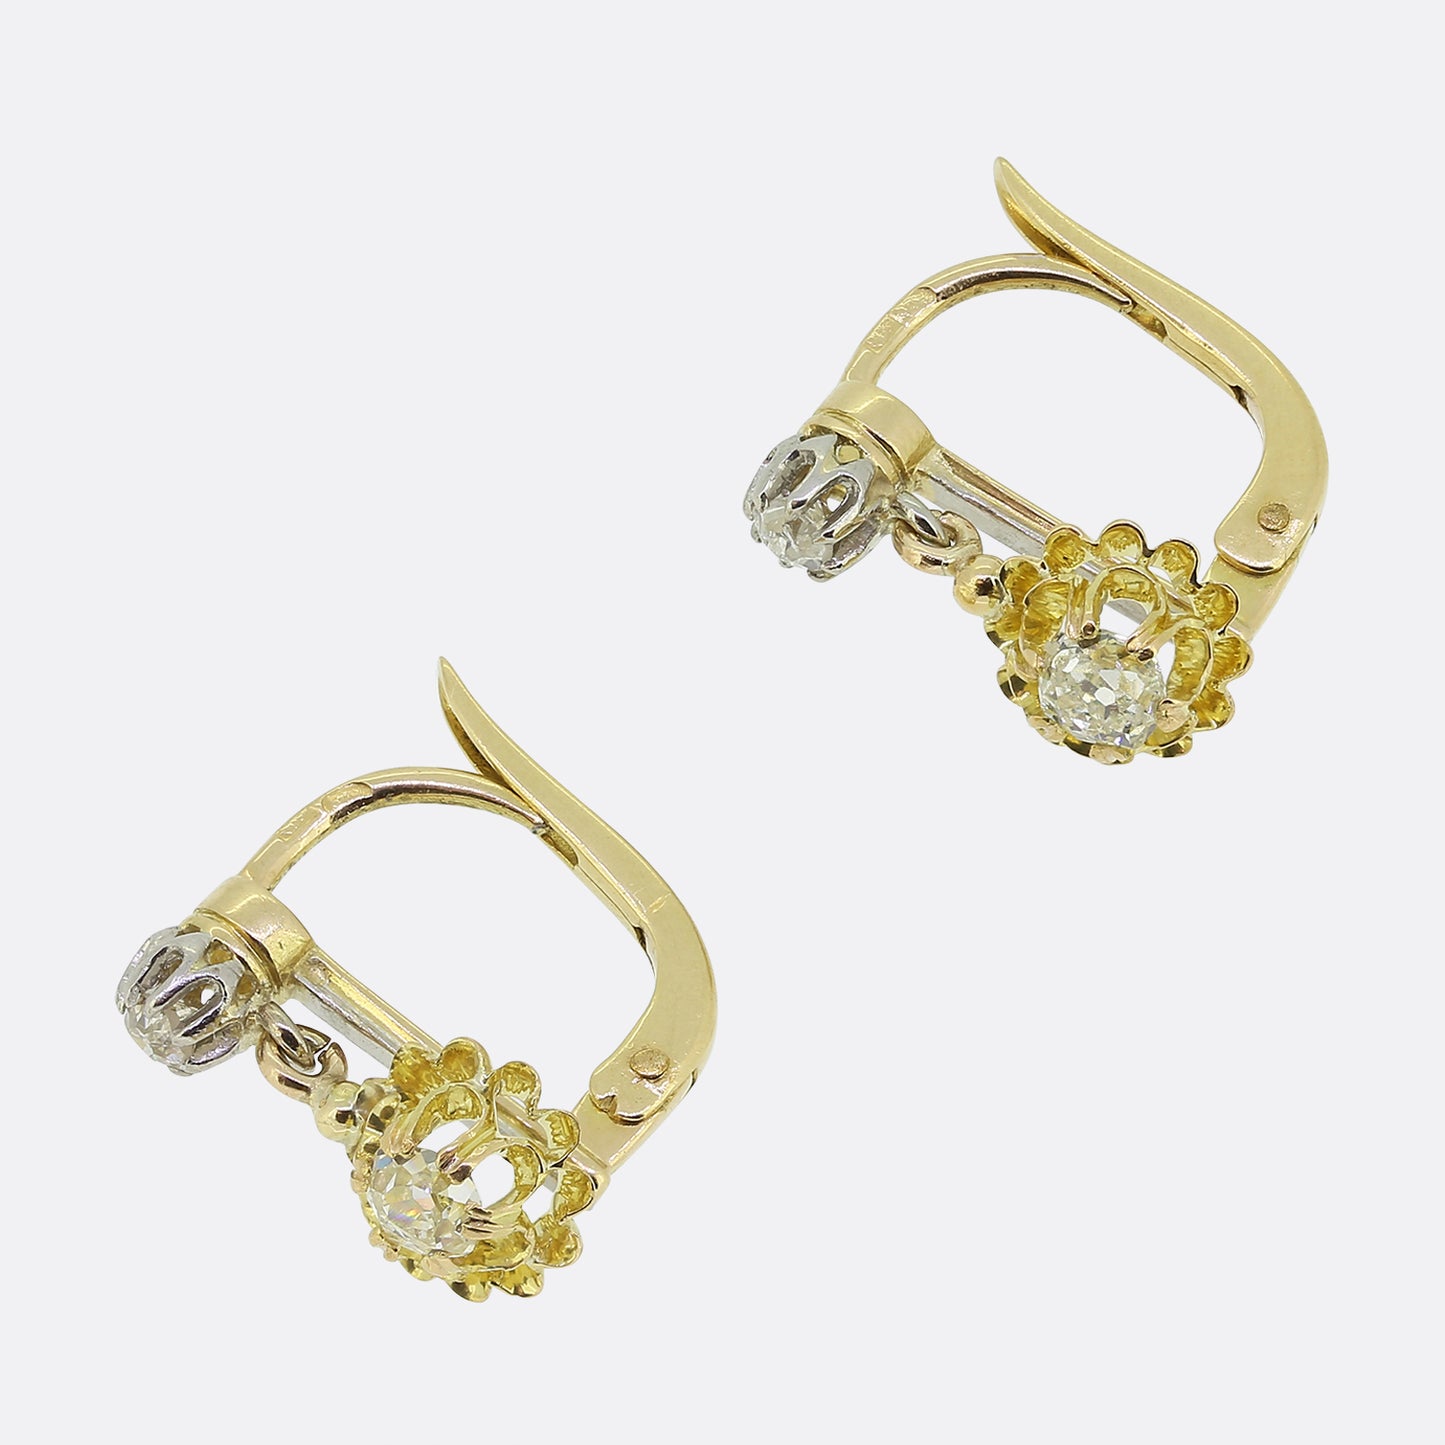 Antique French Diamond Dormeuse Earrings